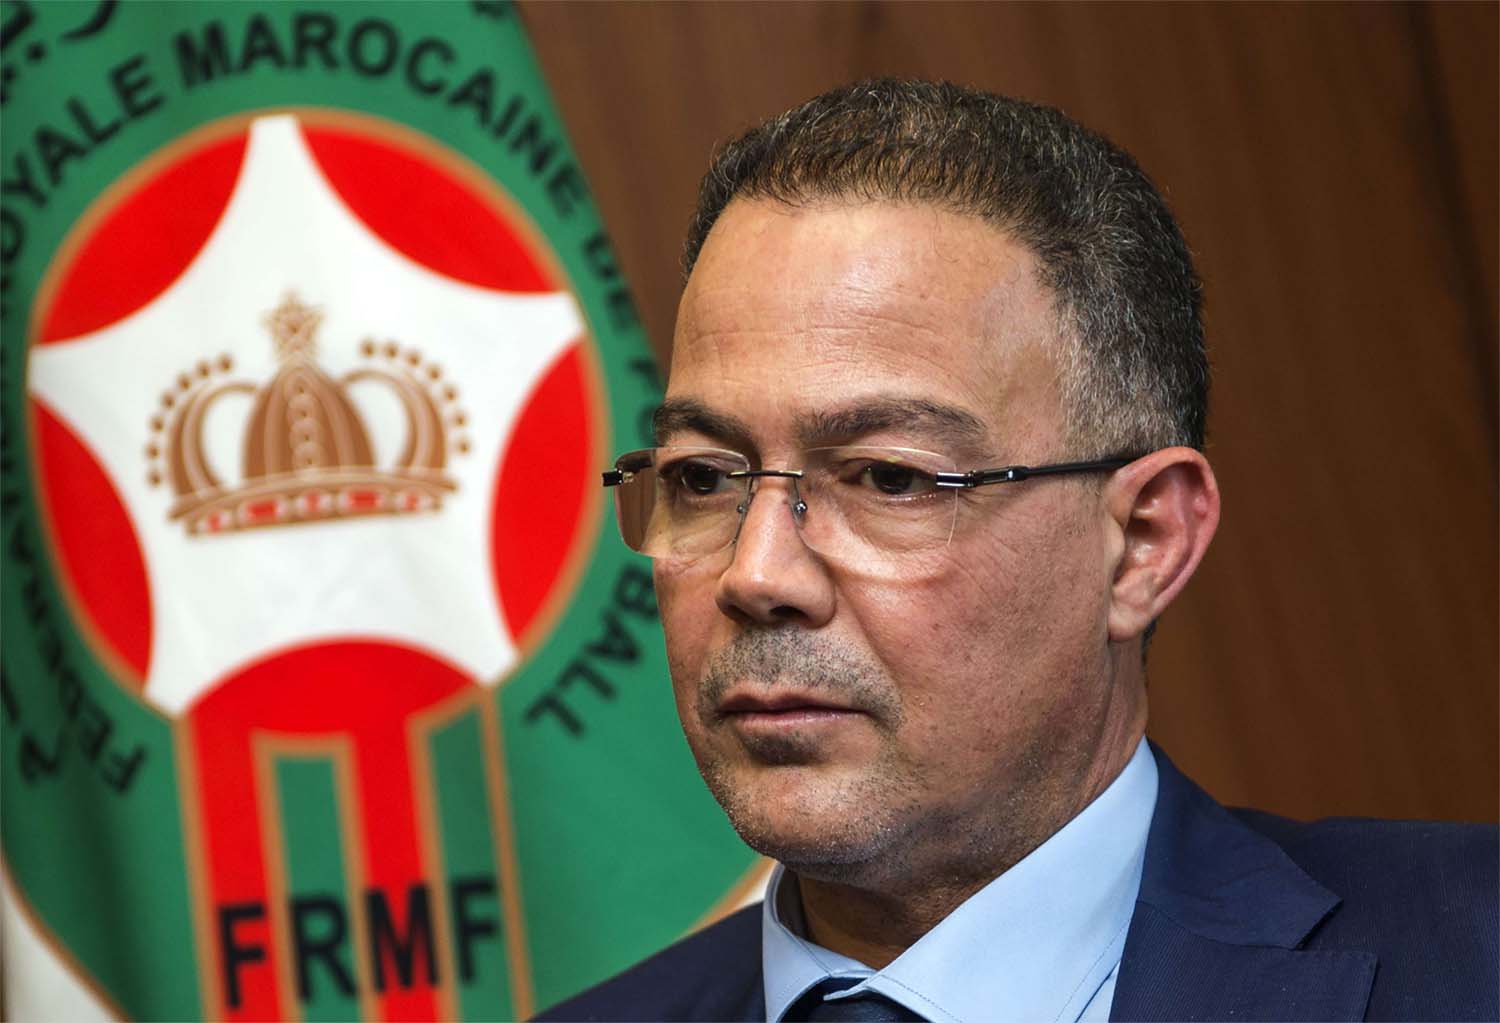 Fouzi Lekjaa, President of Morocco's Royal Football Federation